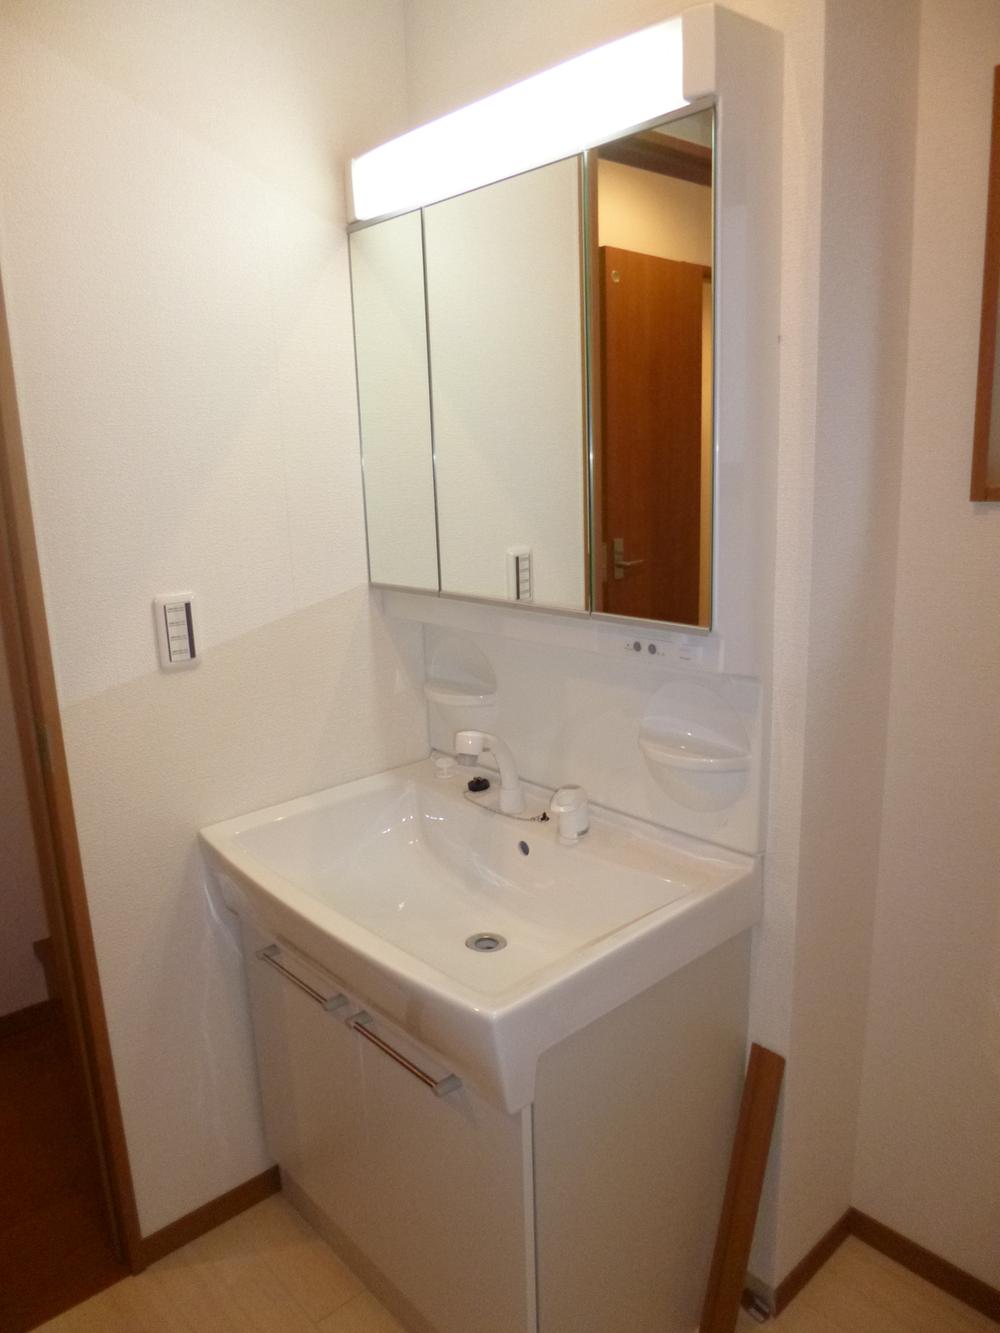 Wash basin, toilet. (2013.11.29 shooting)